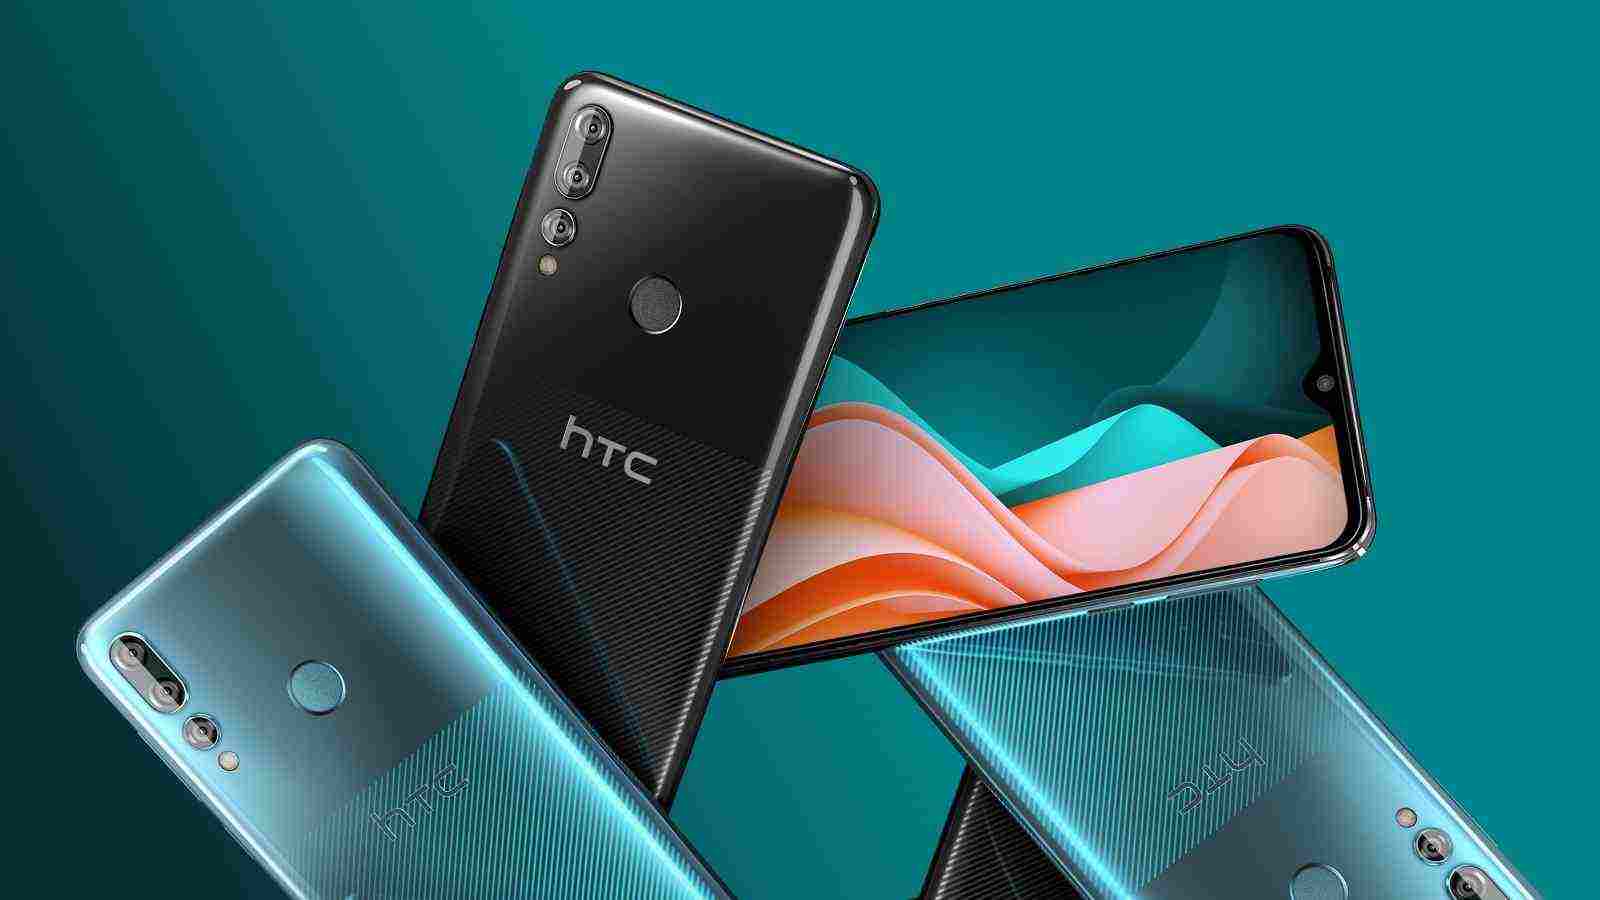 HTC представила недорогой смартфон Desire 19s